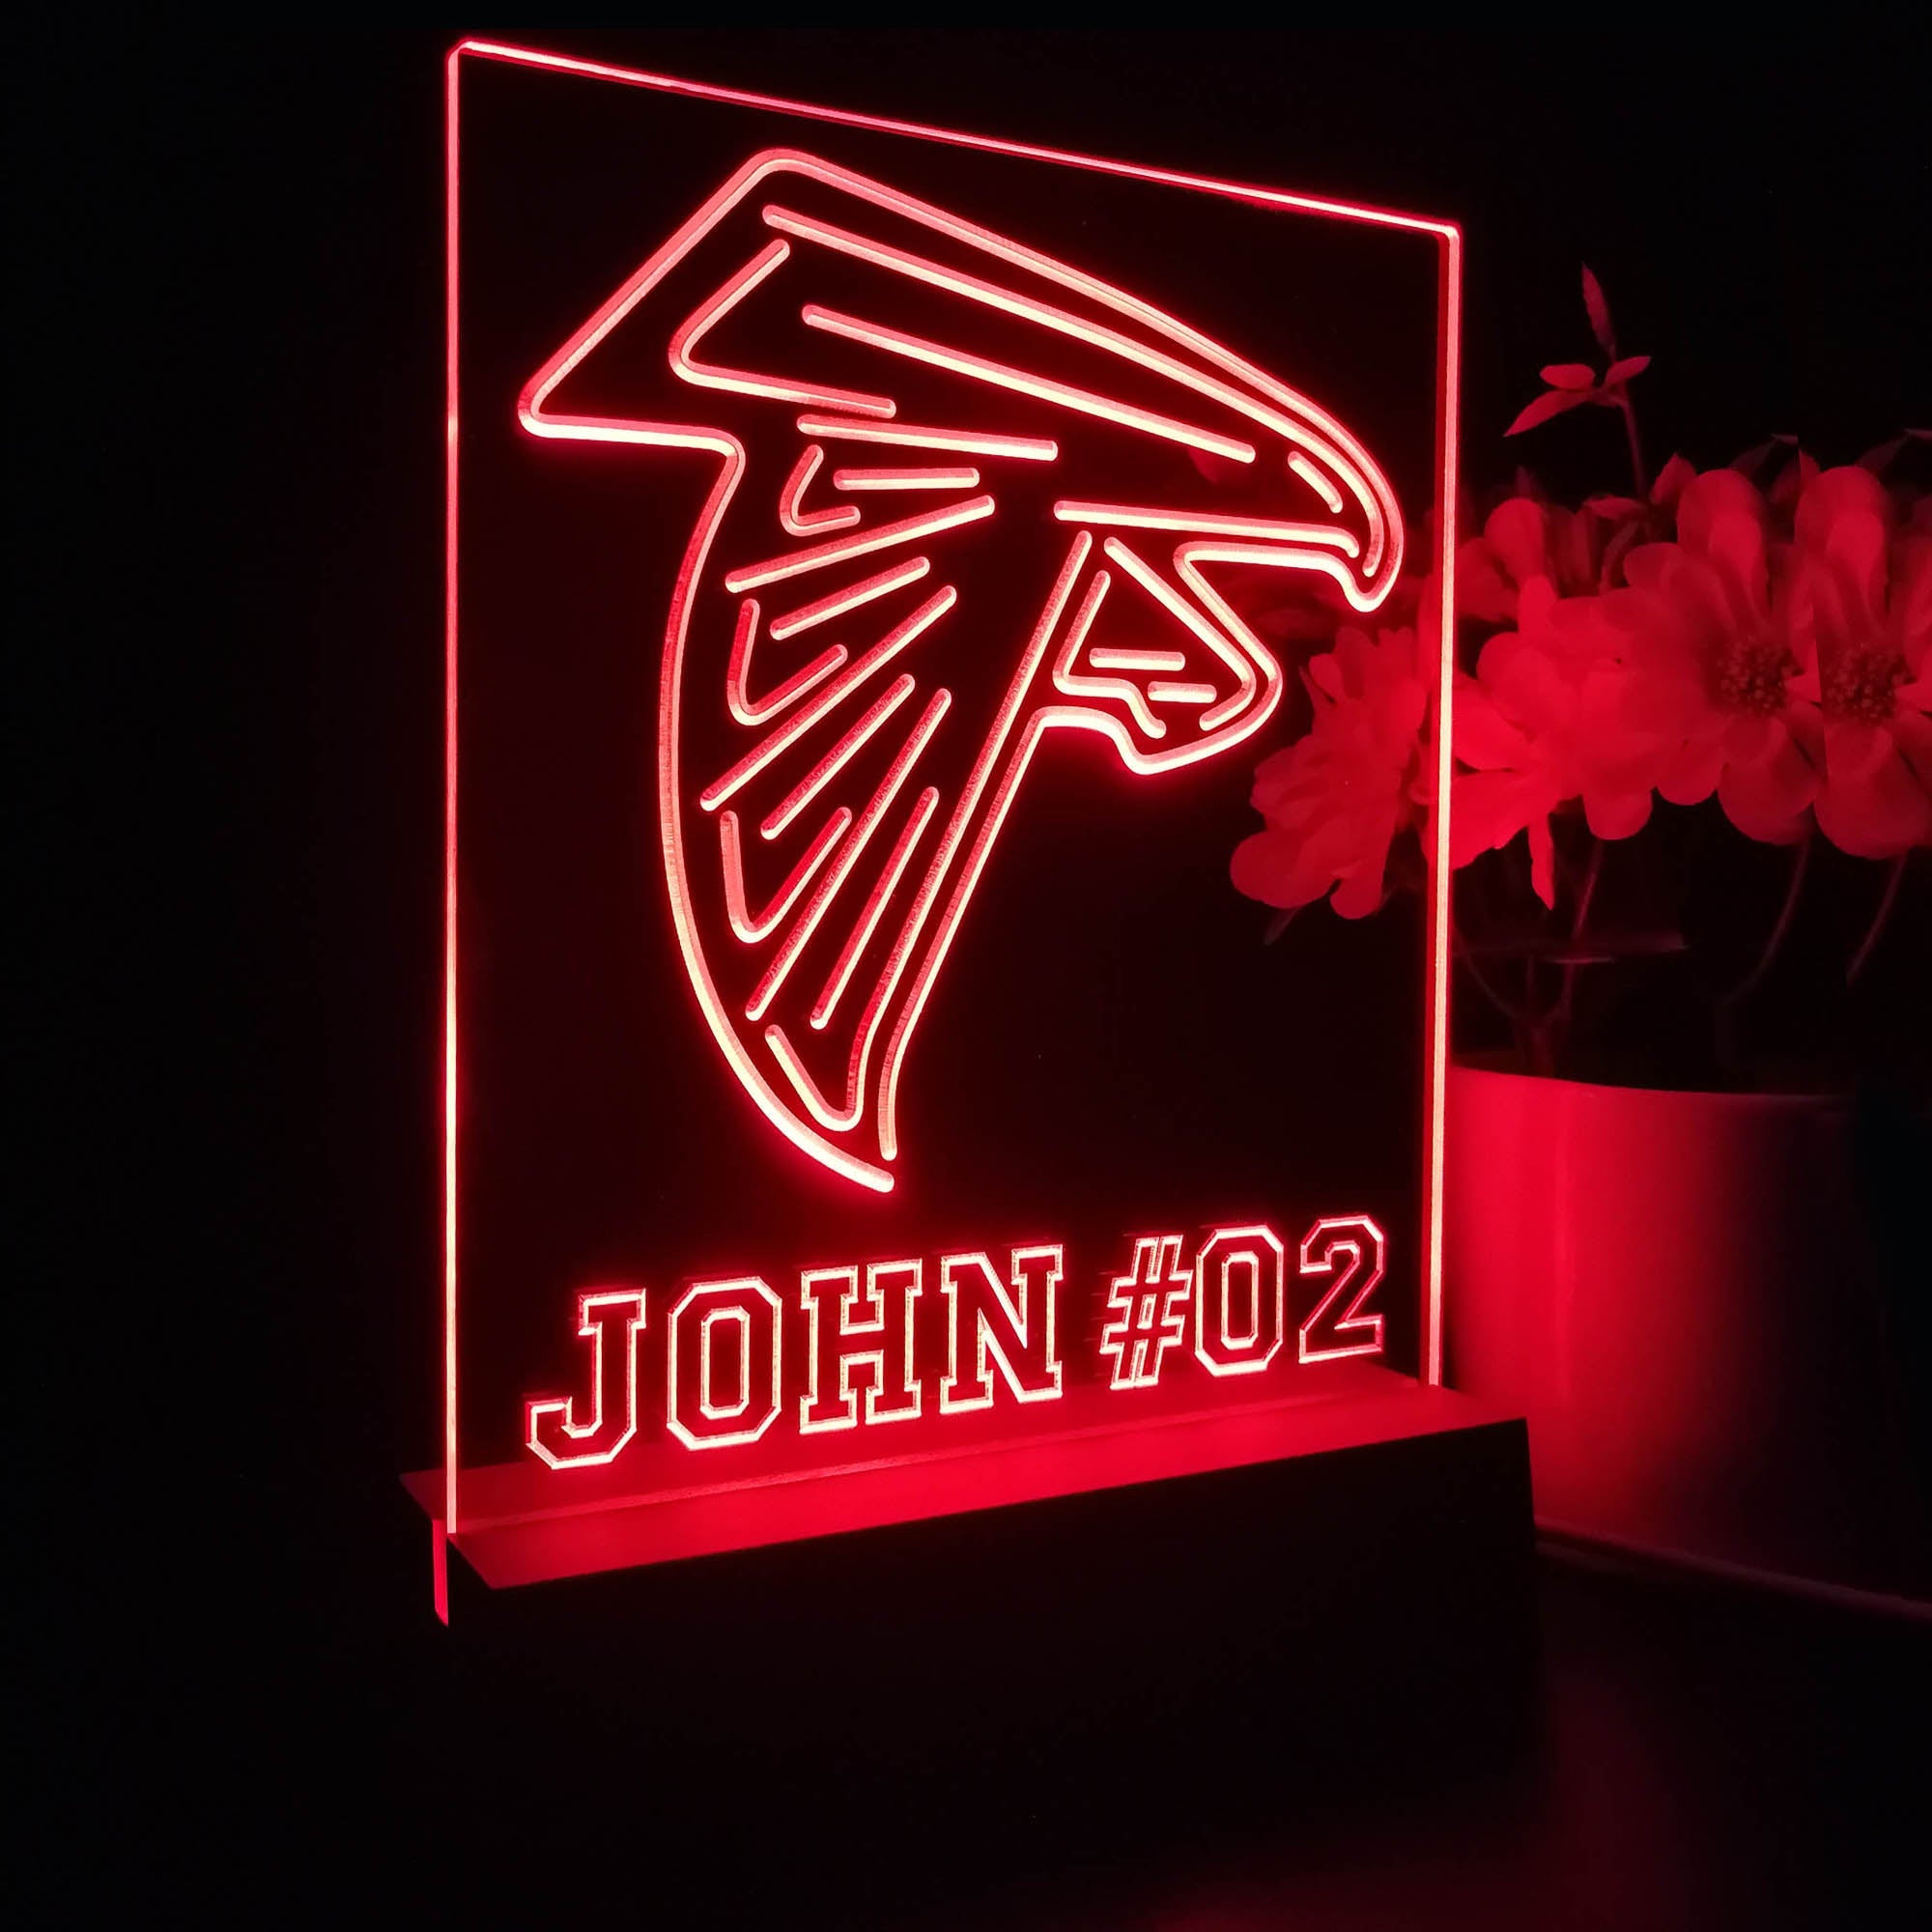 Personalized Atlanta Falcons Souvenir Neon LED Night Light Sign